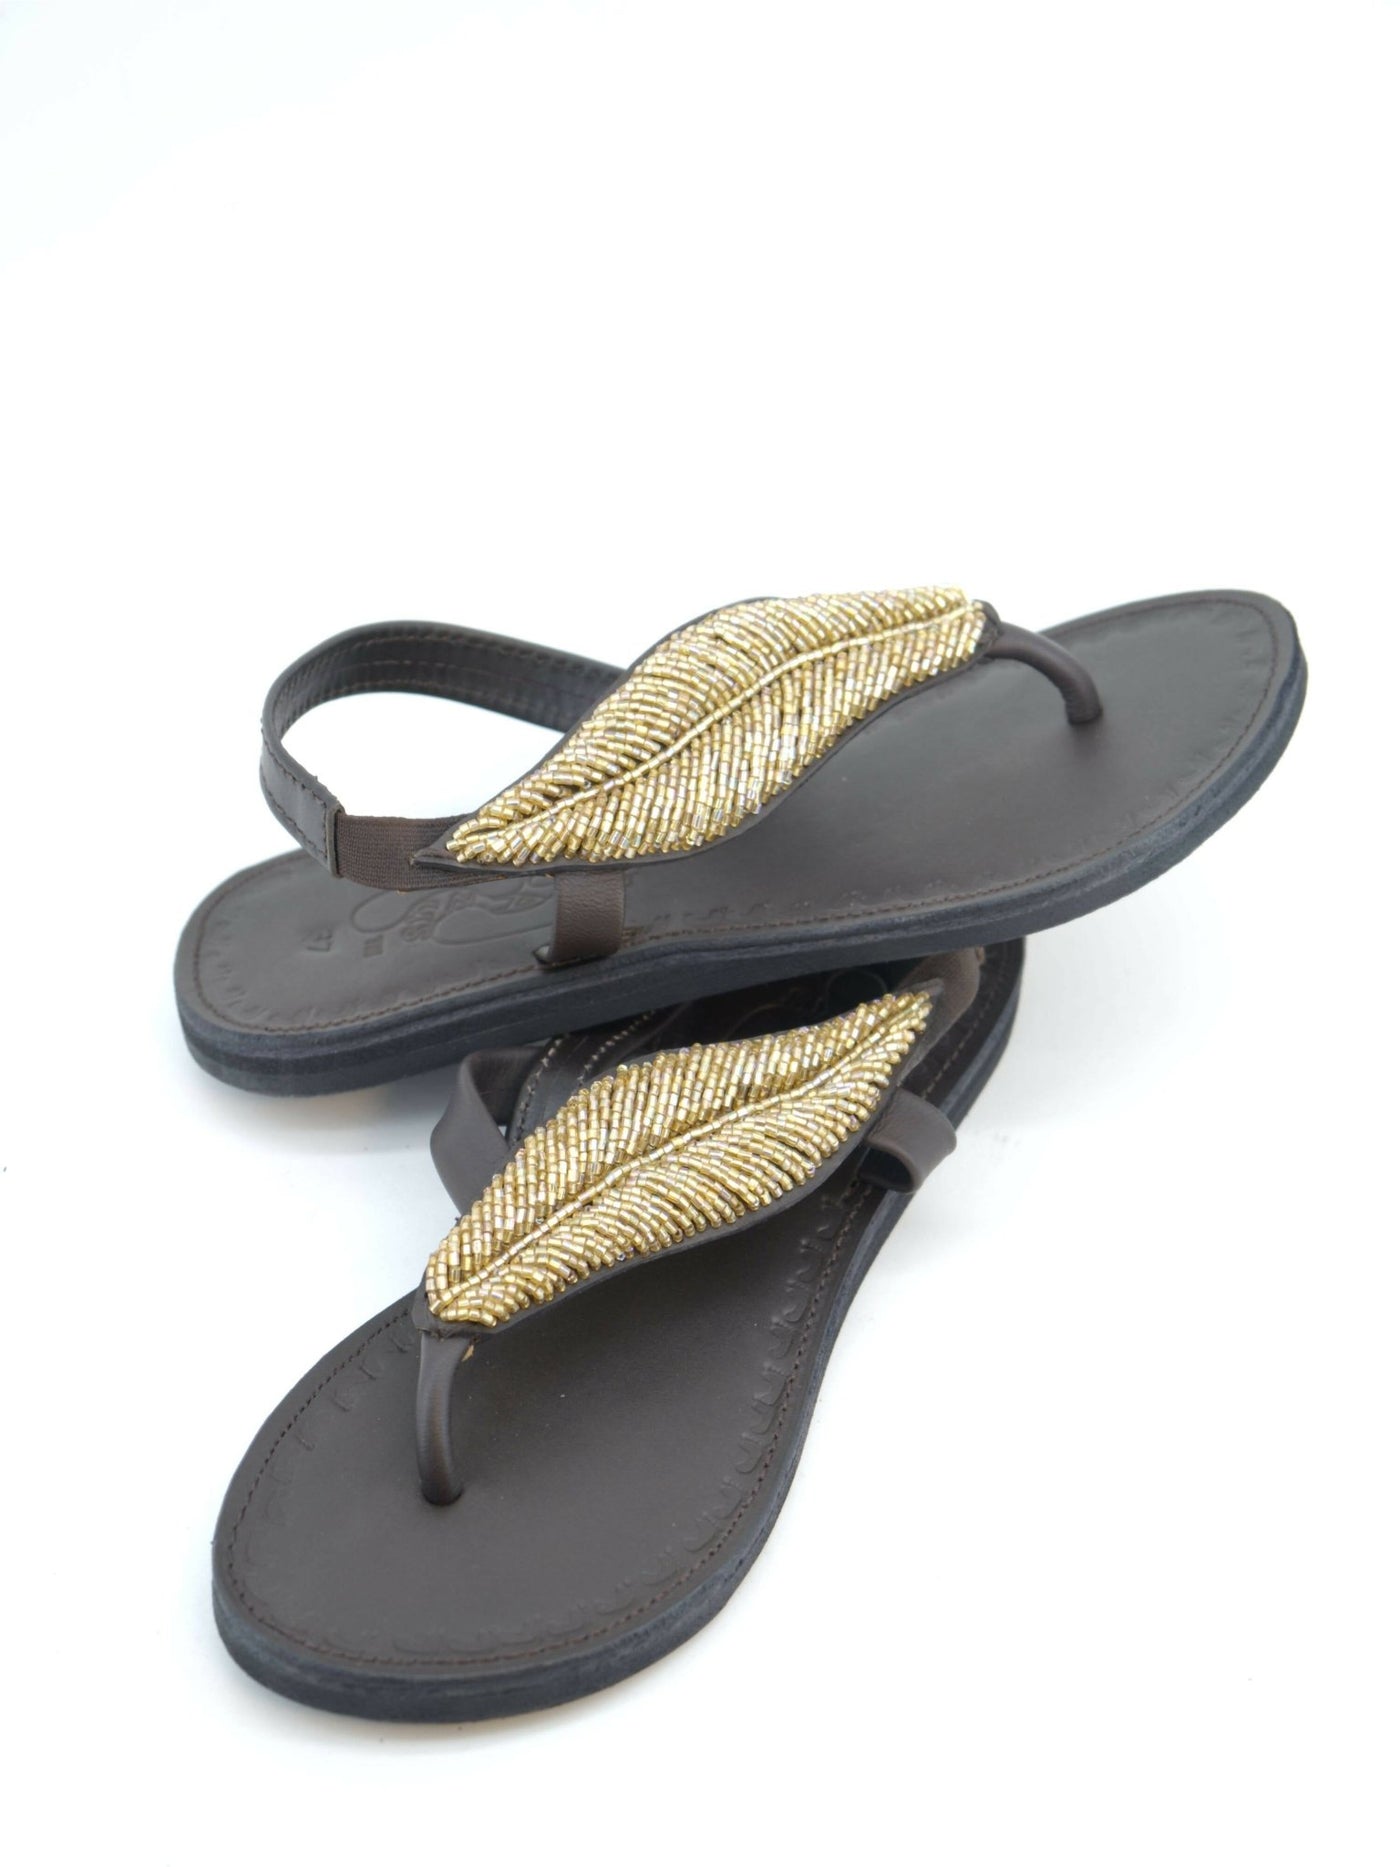 Azu's Casual Leaf Backstrap Sandals - Dark Brown / Gold Beads - Shopzetu